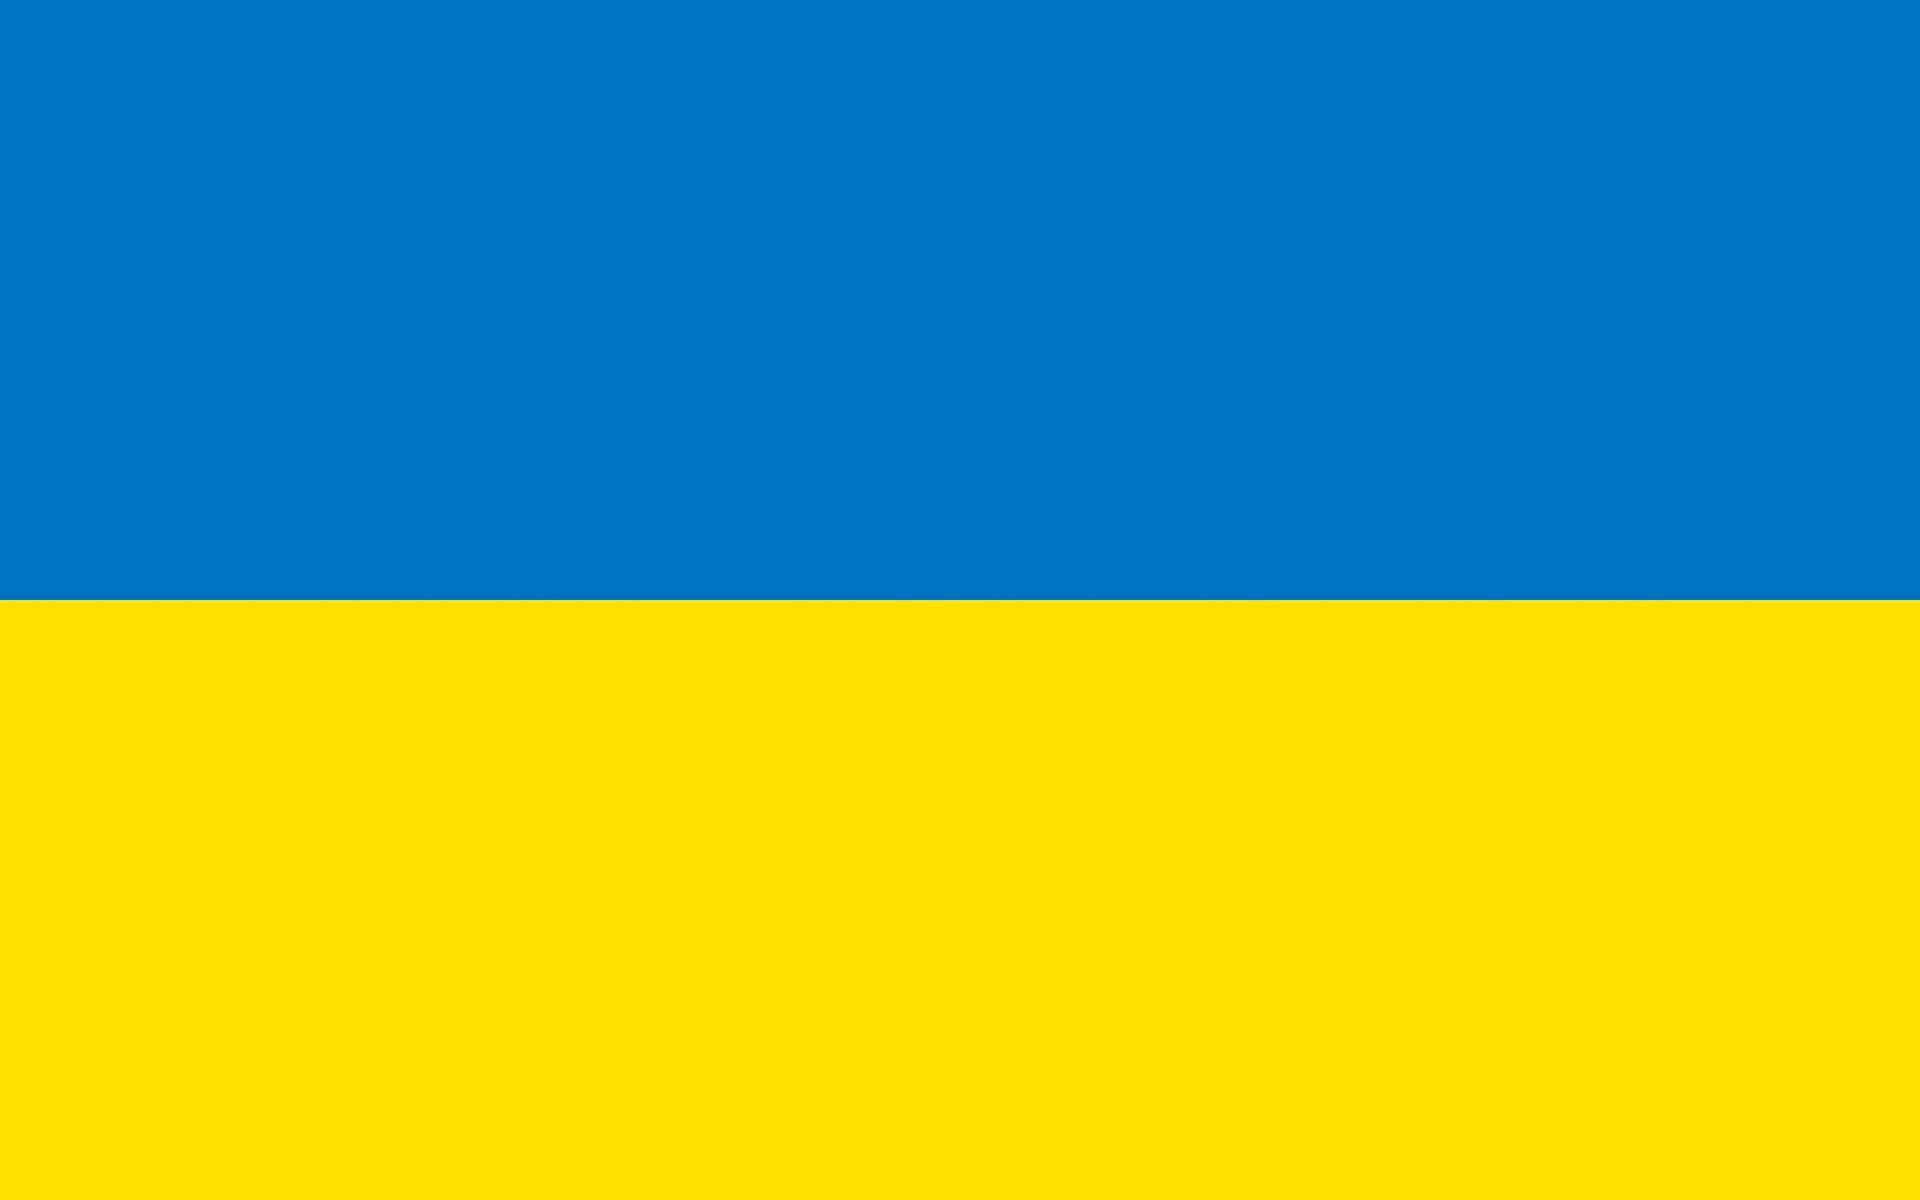 Saturday March 12th: All Sales Support Ukraine